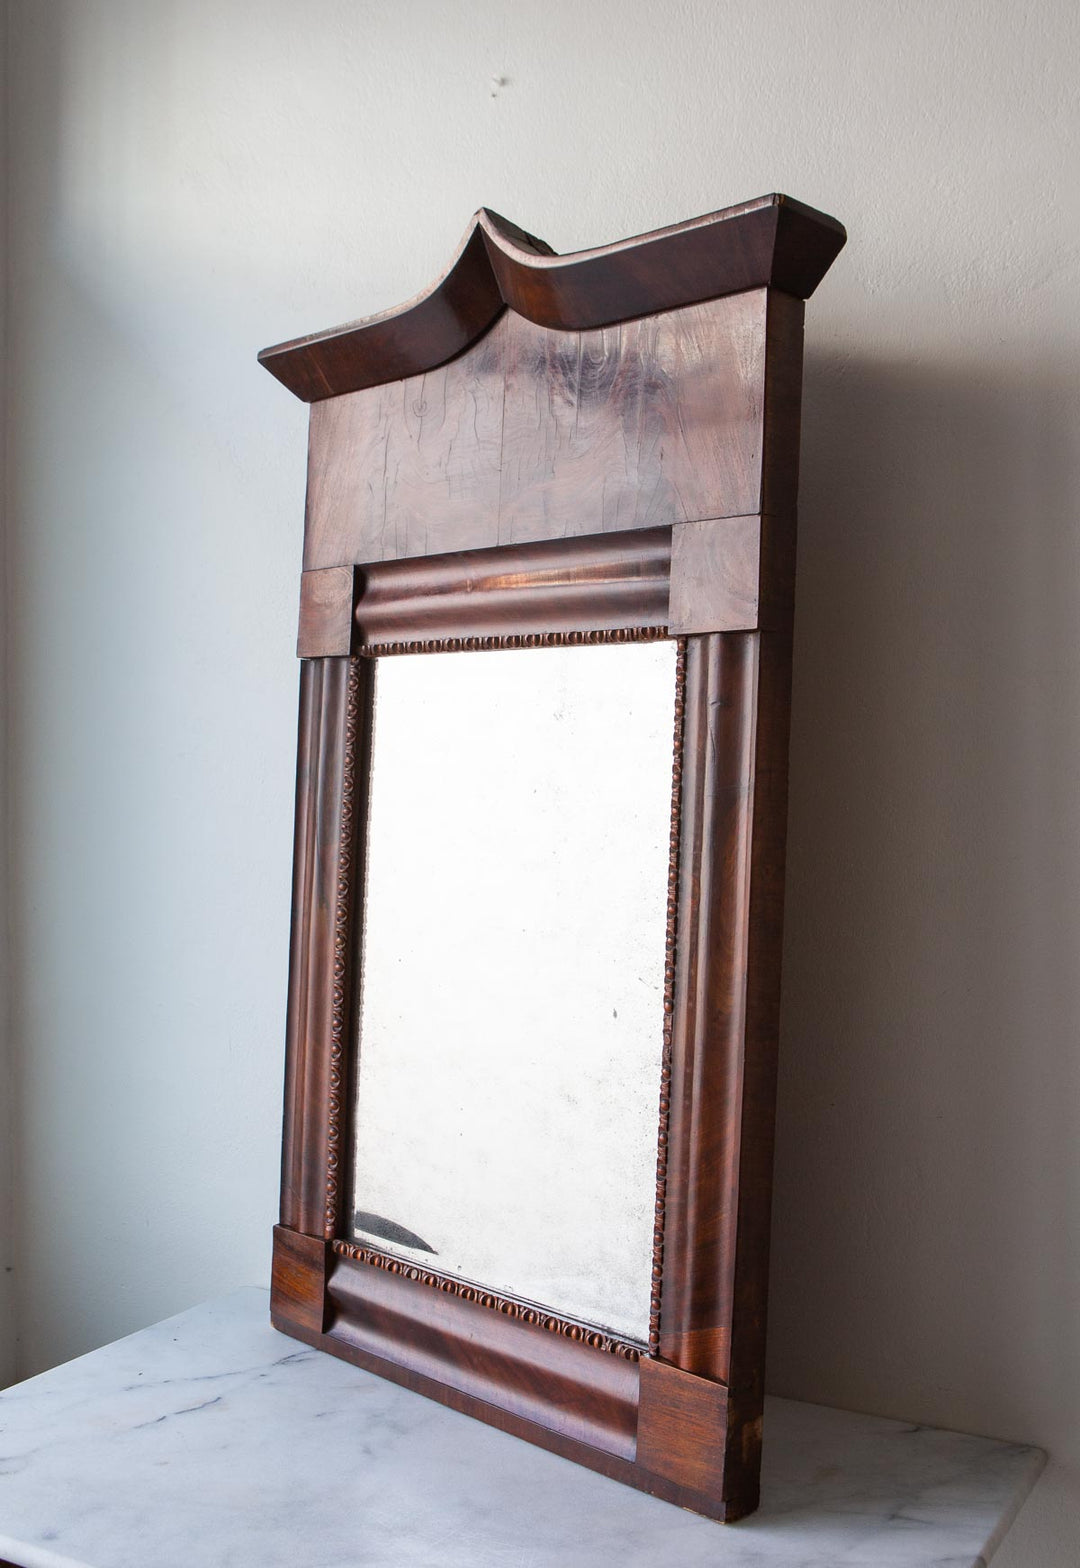 Antiguo espejo caoba mercurio principios s. XIX miroir acajou antique french mirror mahogany